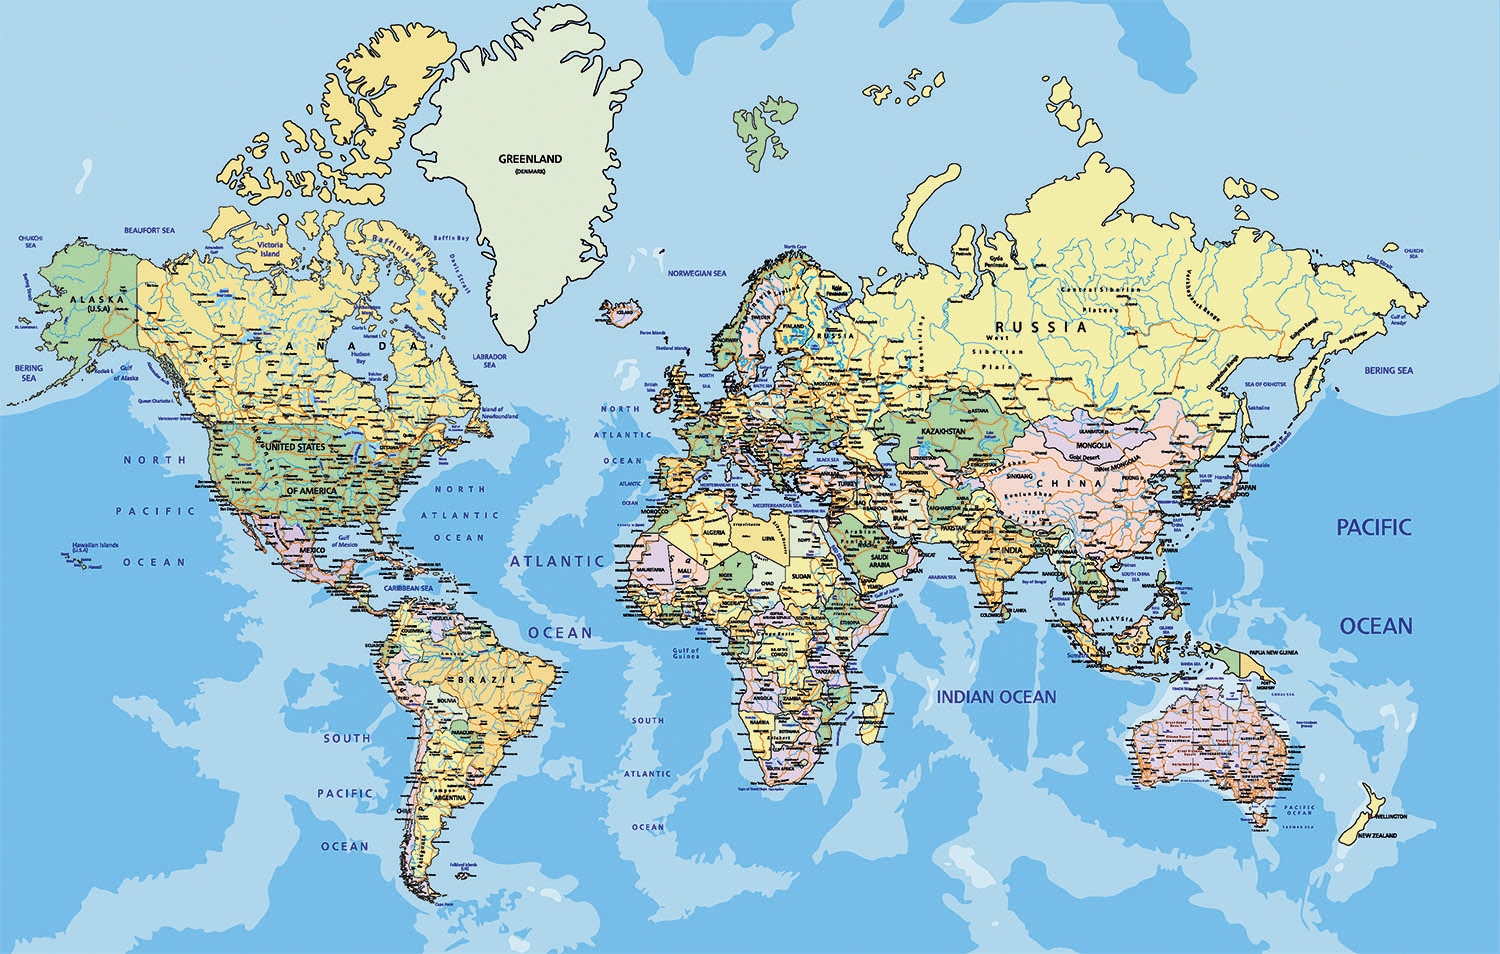 Papermoon Fototapete »World Map«